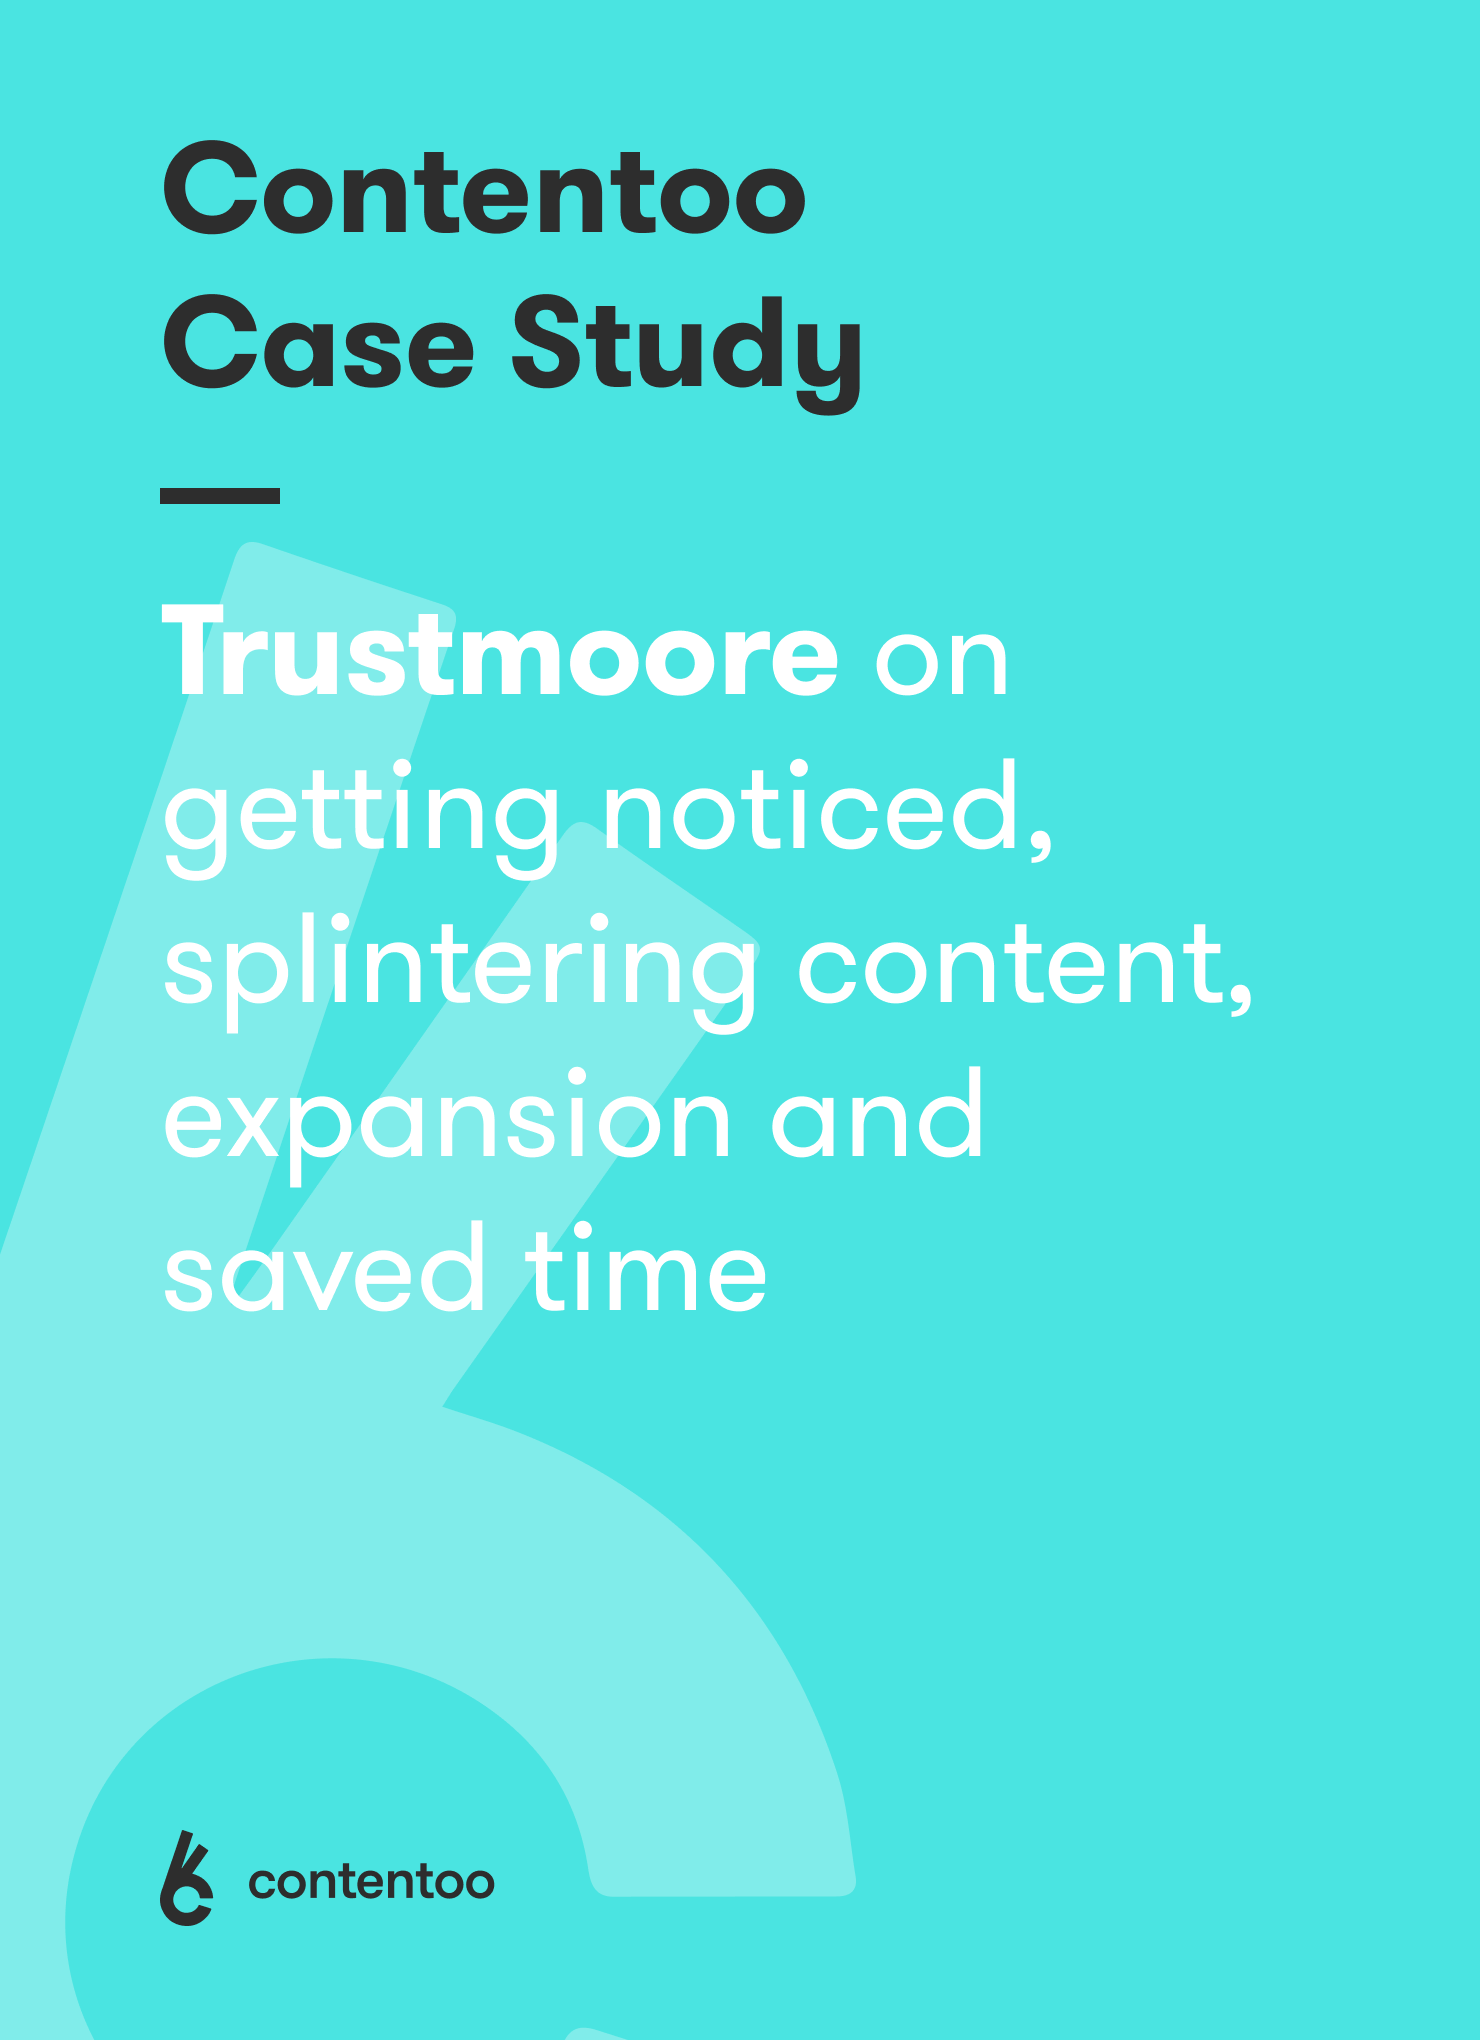 Trustmoore case study Contentoo